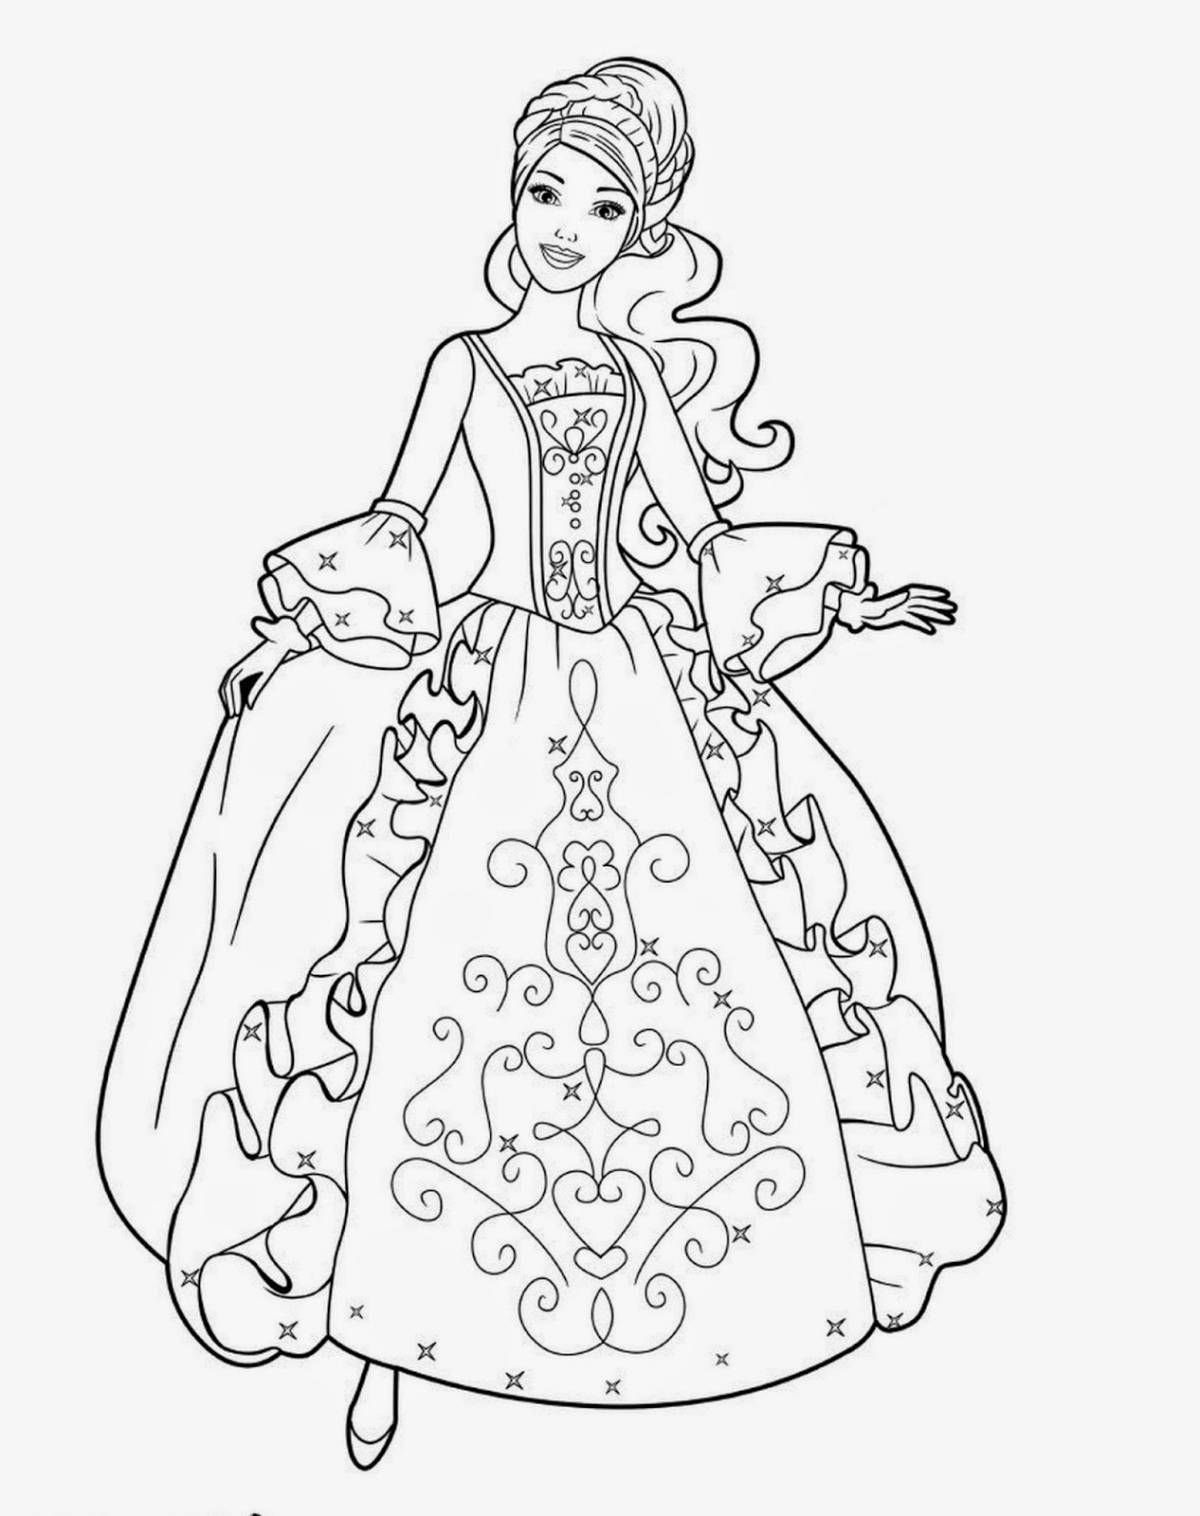 Charming princess coloring in beautiful dresses